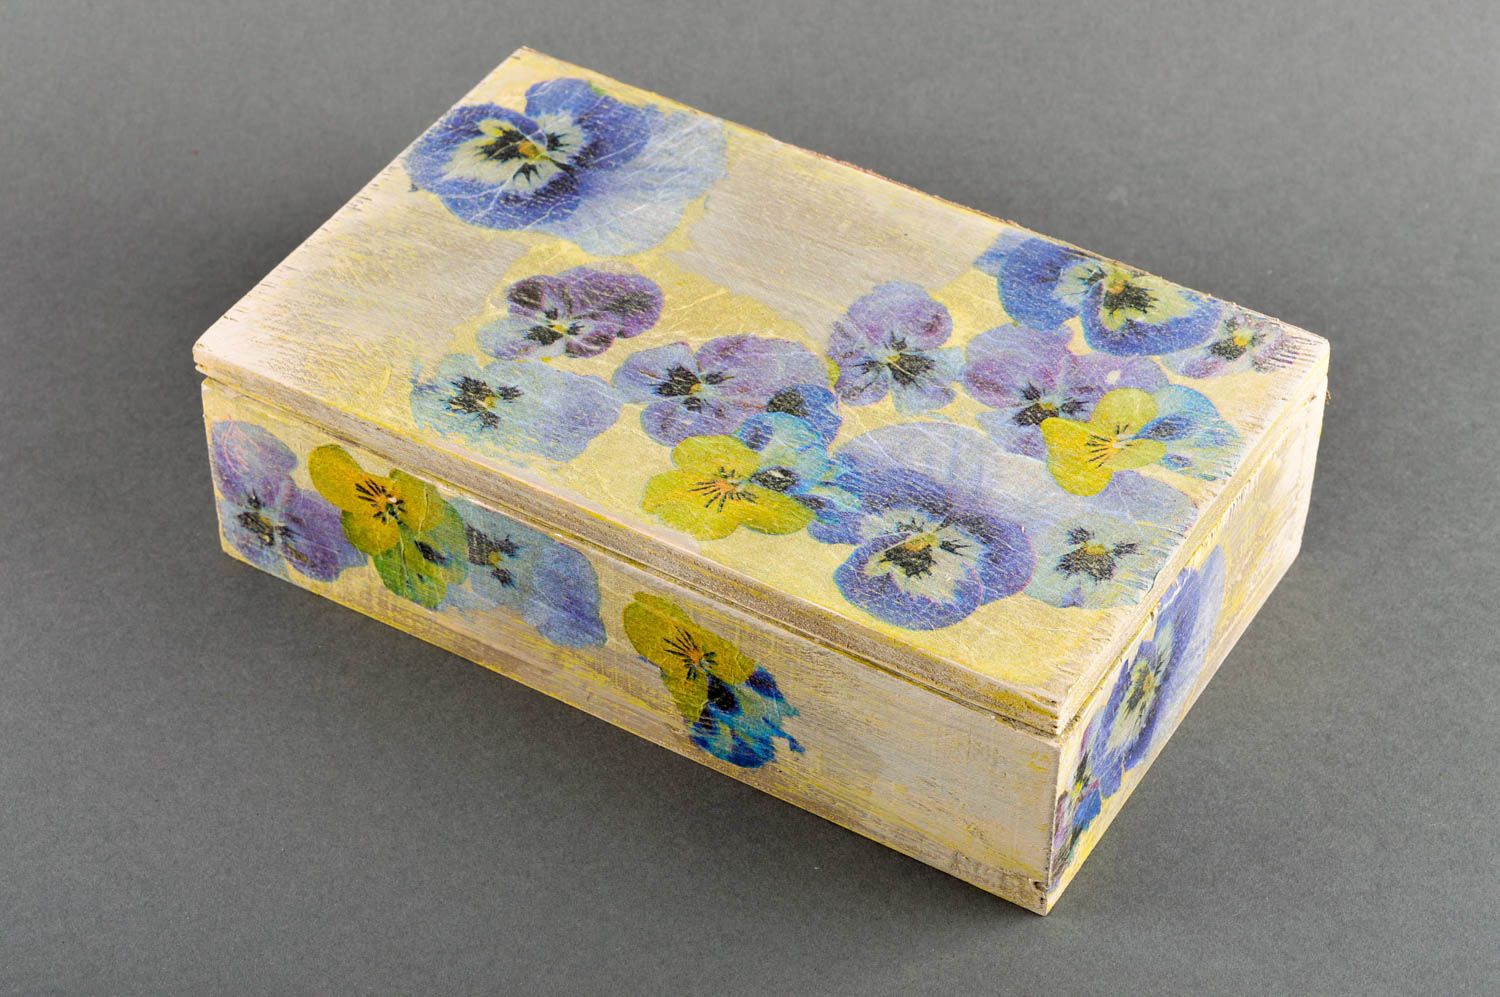 Beautiful handmade wooden box design decorative box for accessories gift ideas photo 1